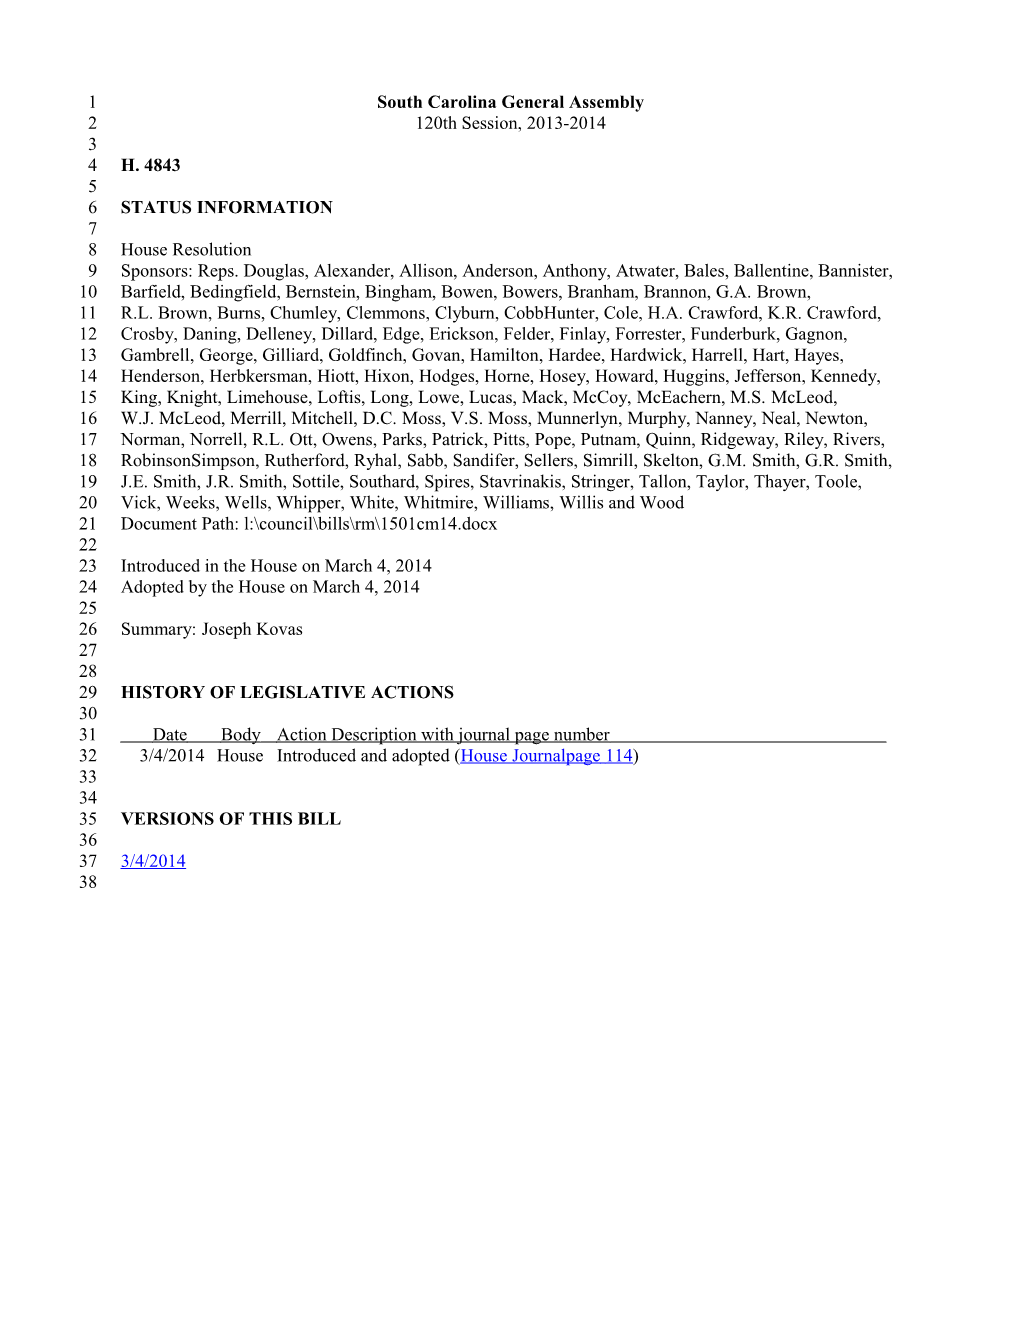 2013-2014 Bill 4843: Joseph Kovas - South Carolina Legislature Online